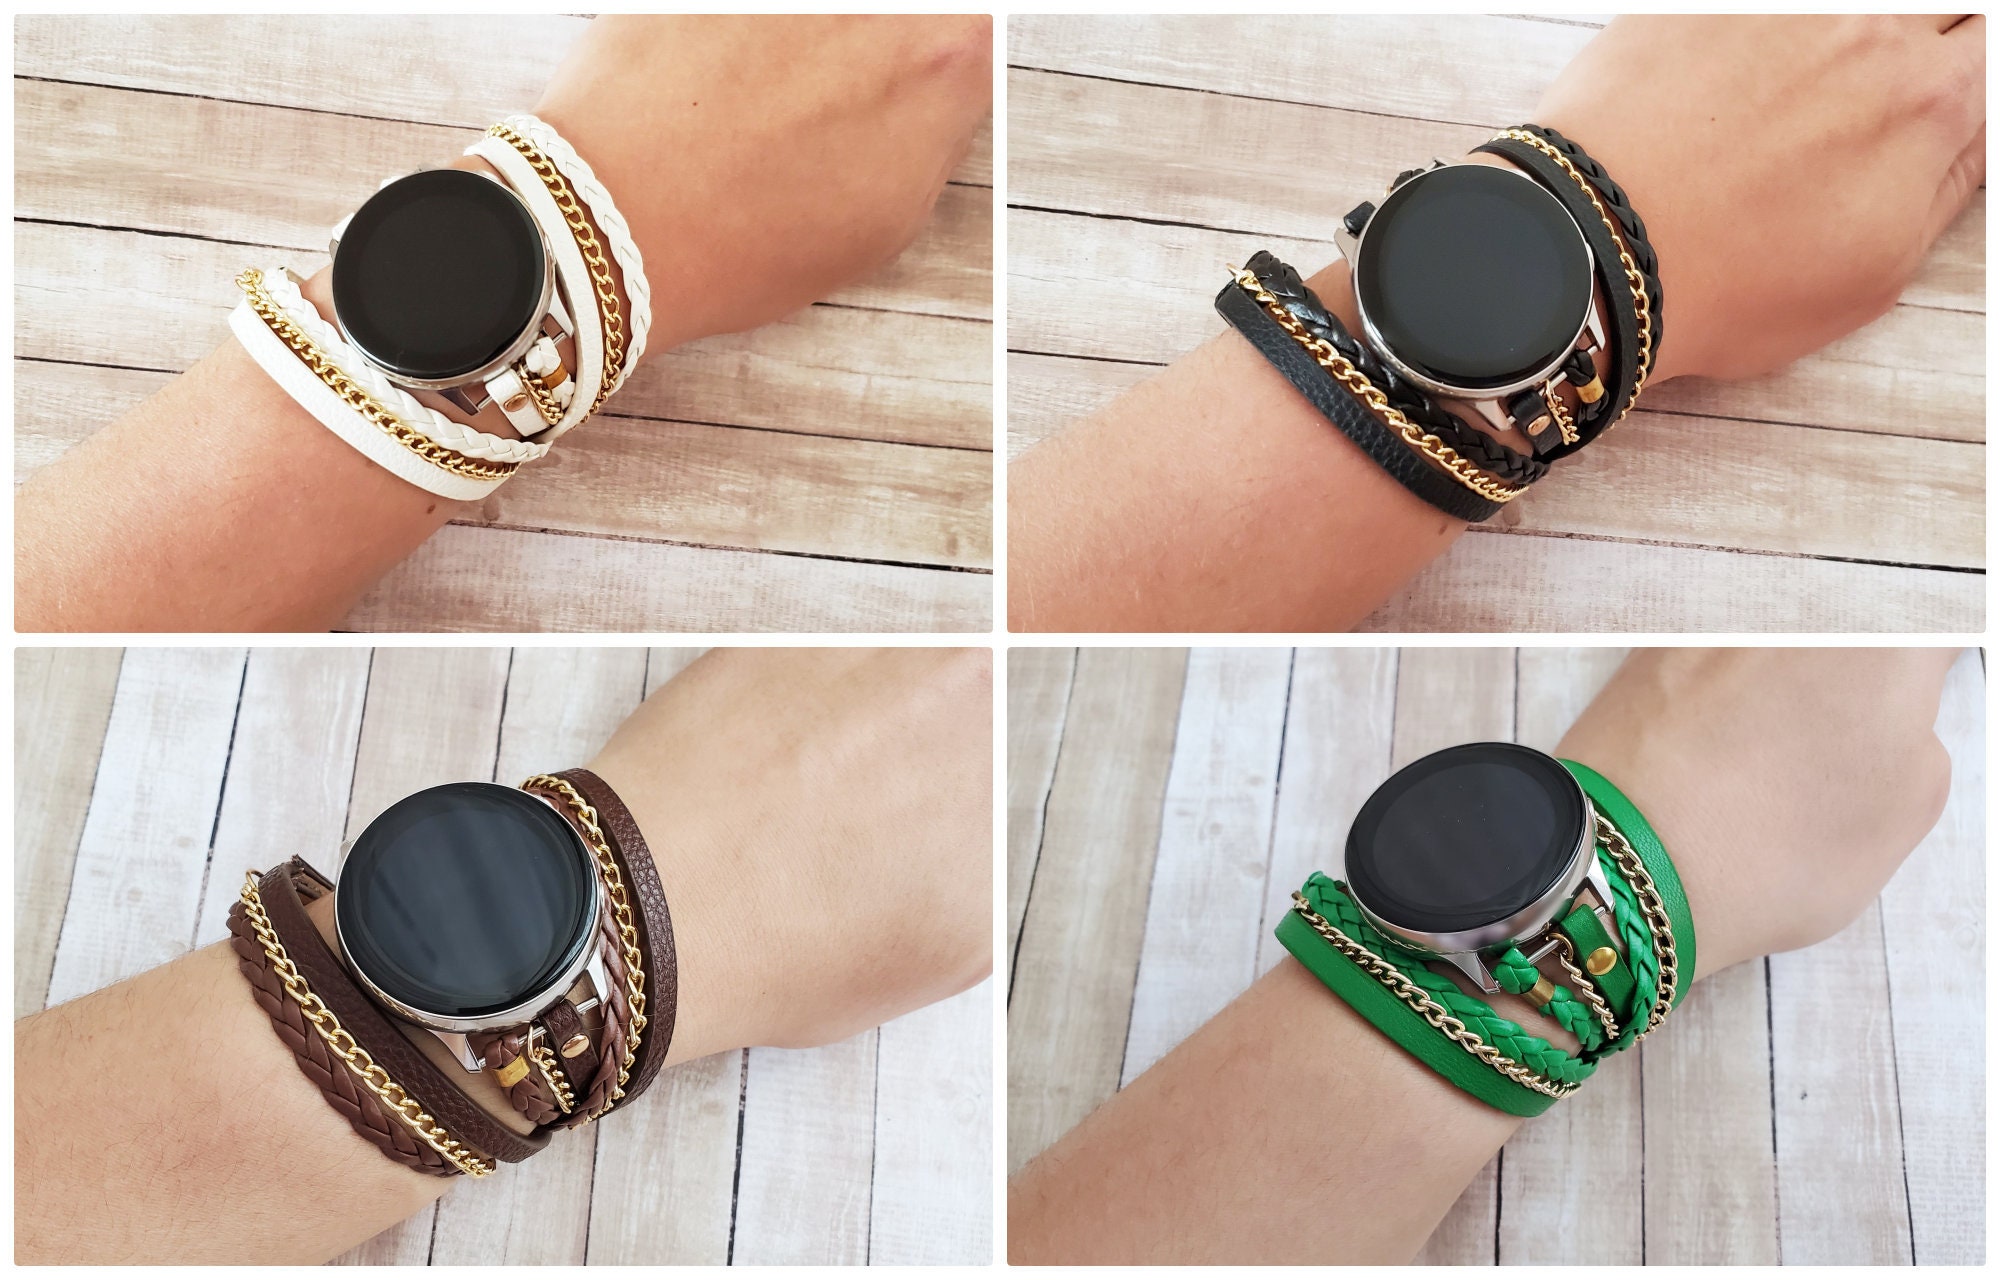 Bracelet en Silicone bicolore pour bracelet Garmin Forerunner